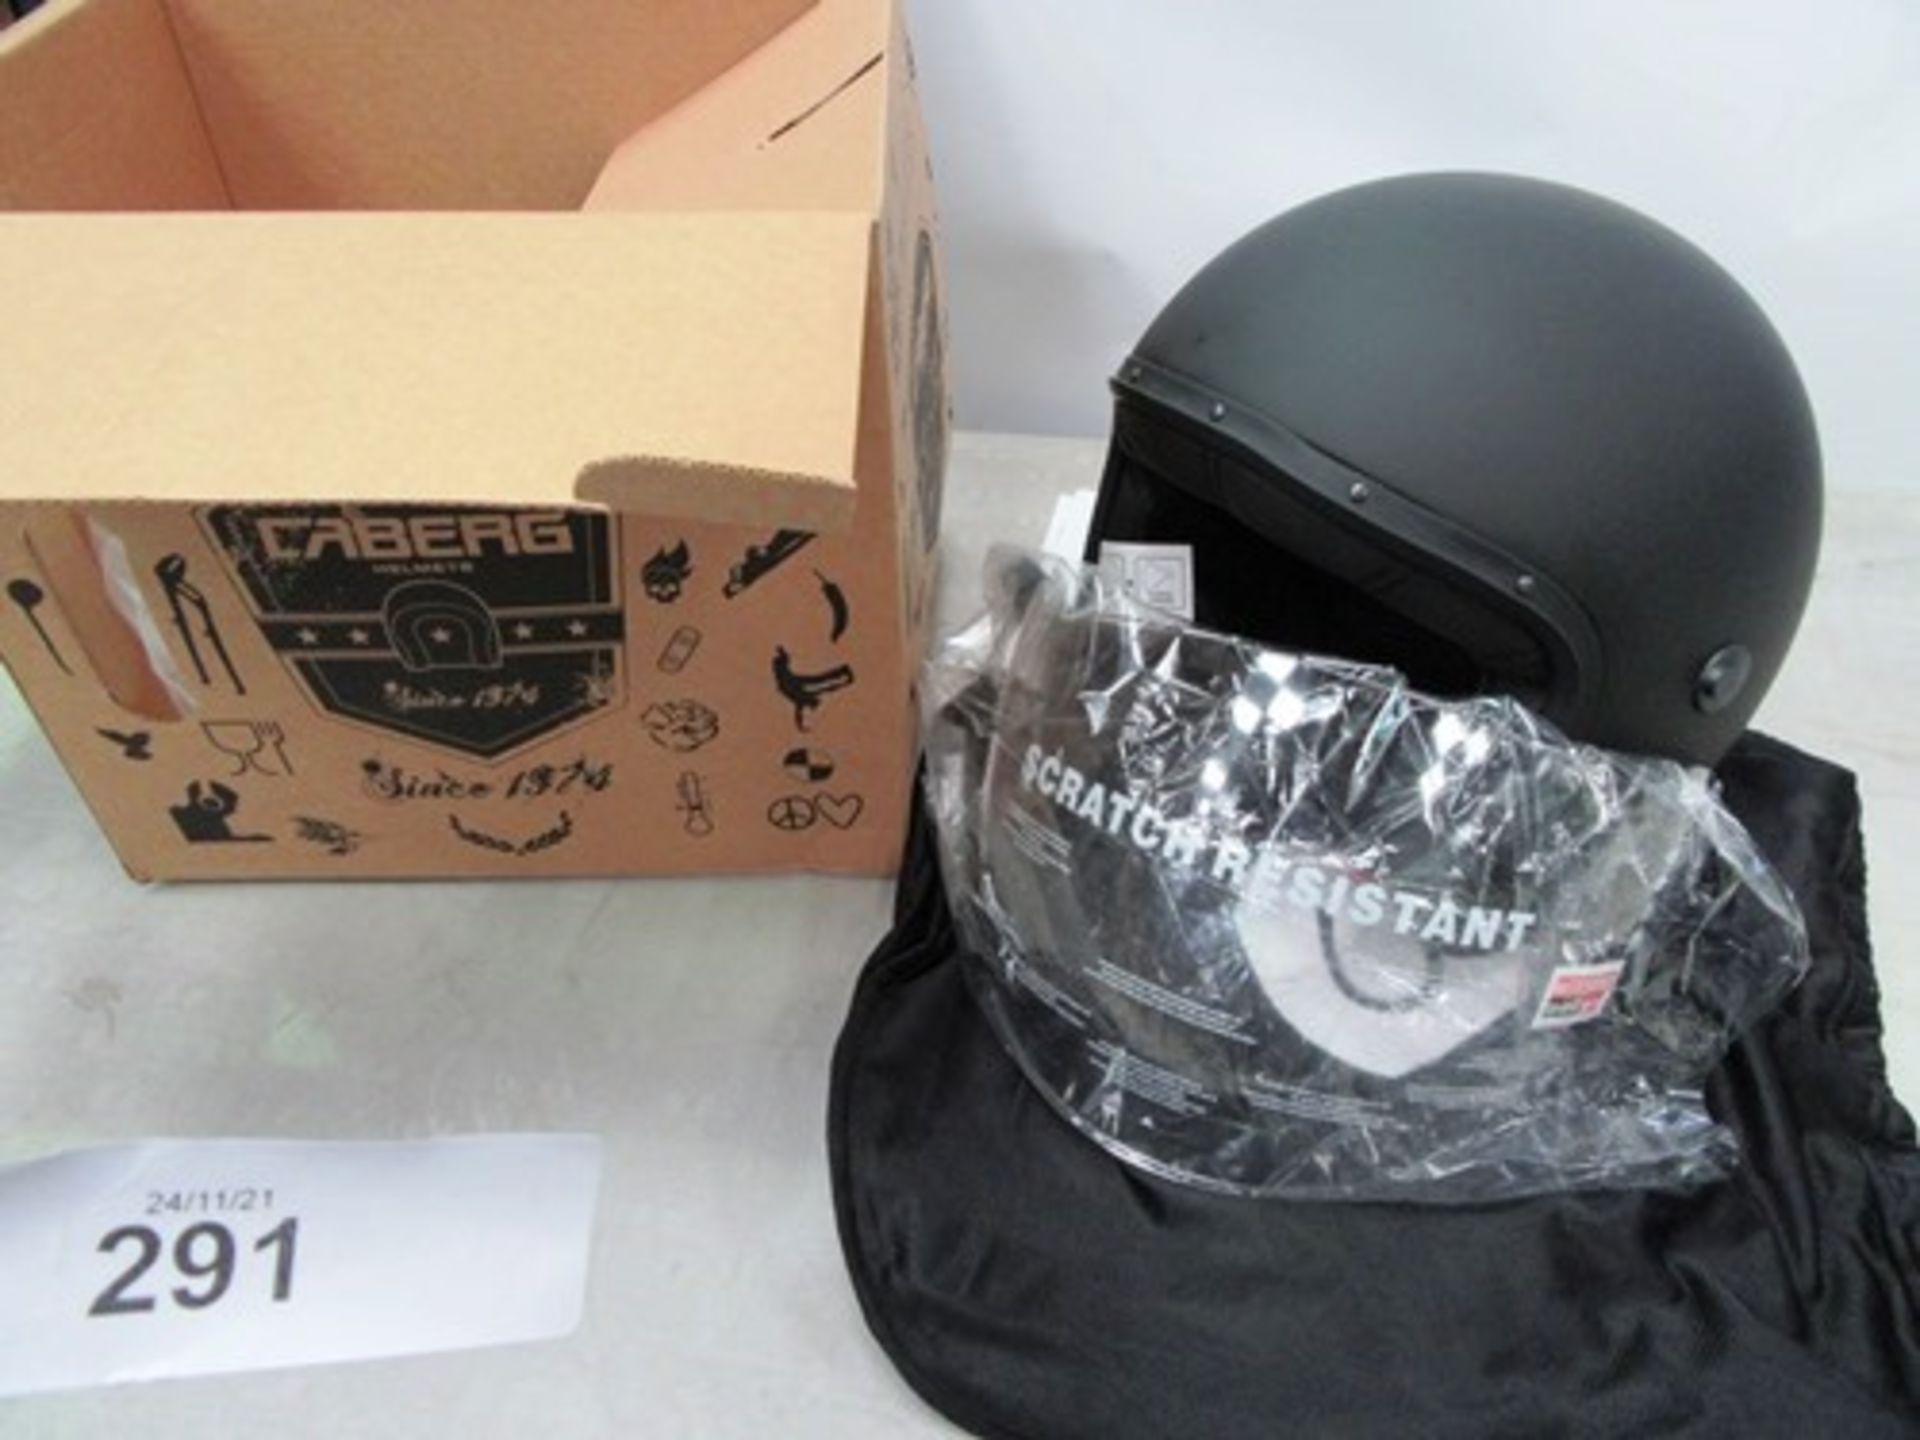 1 x Caberg Jet Free Ride matte black motorcycle helmet, size medium - New in box (GS14end)